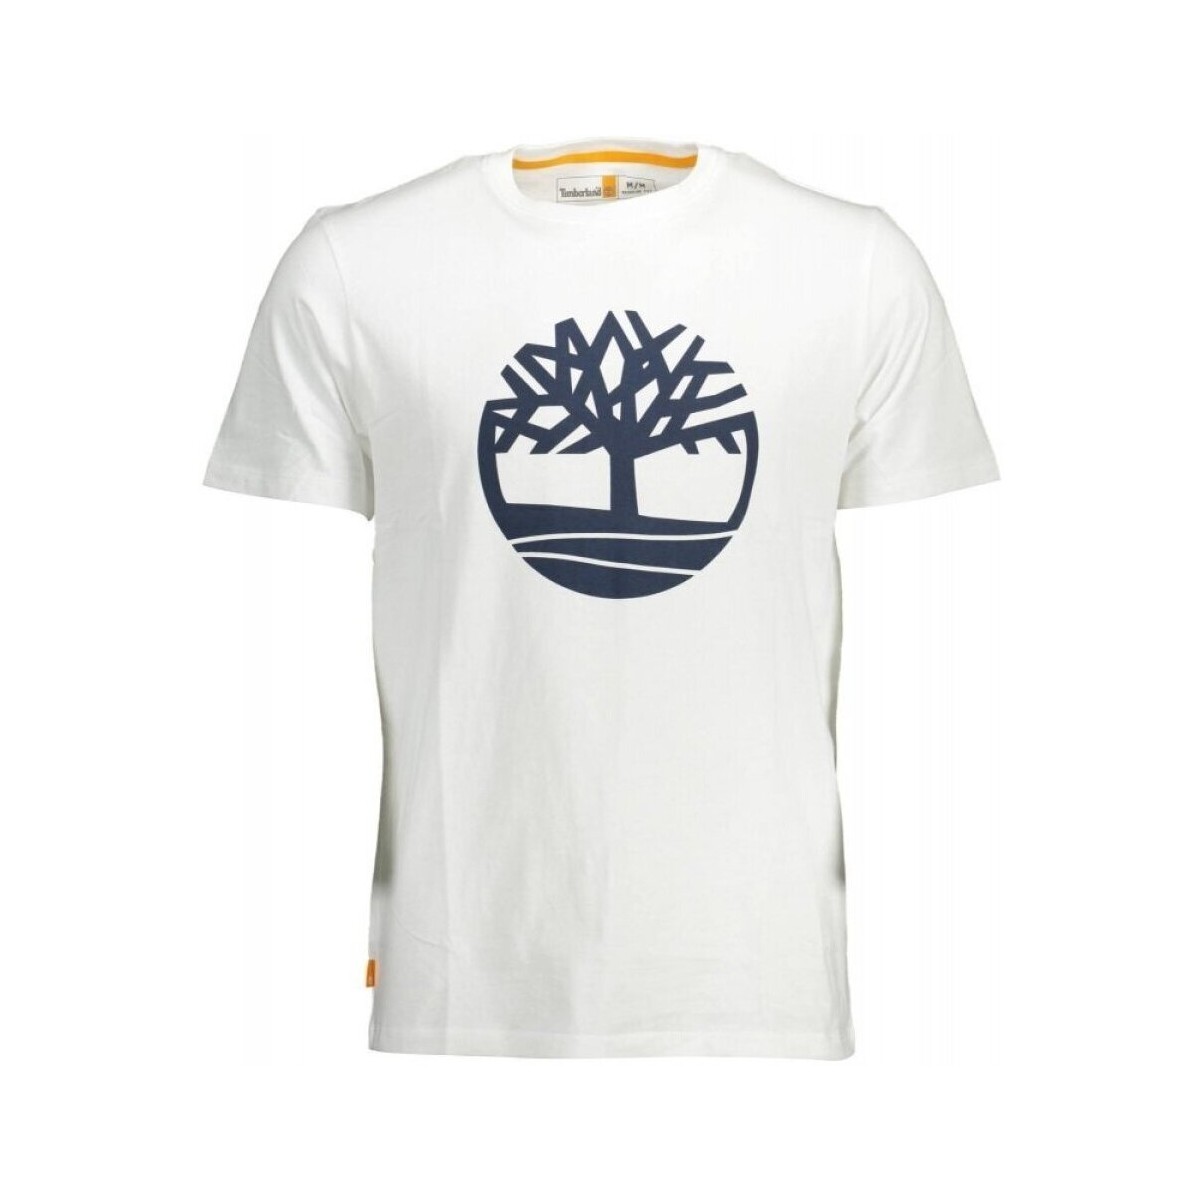 Textil Homem T-Shirt mangas curtas Timberland TB0A2C6S Branco